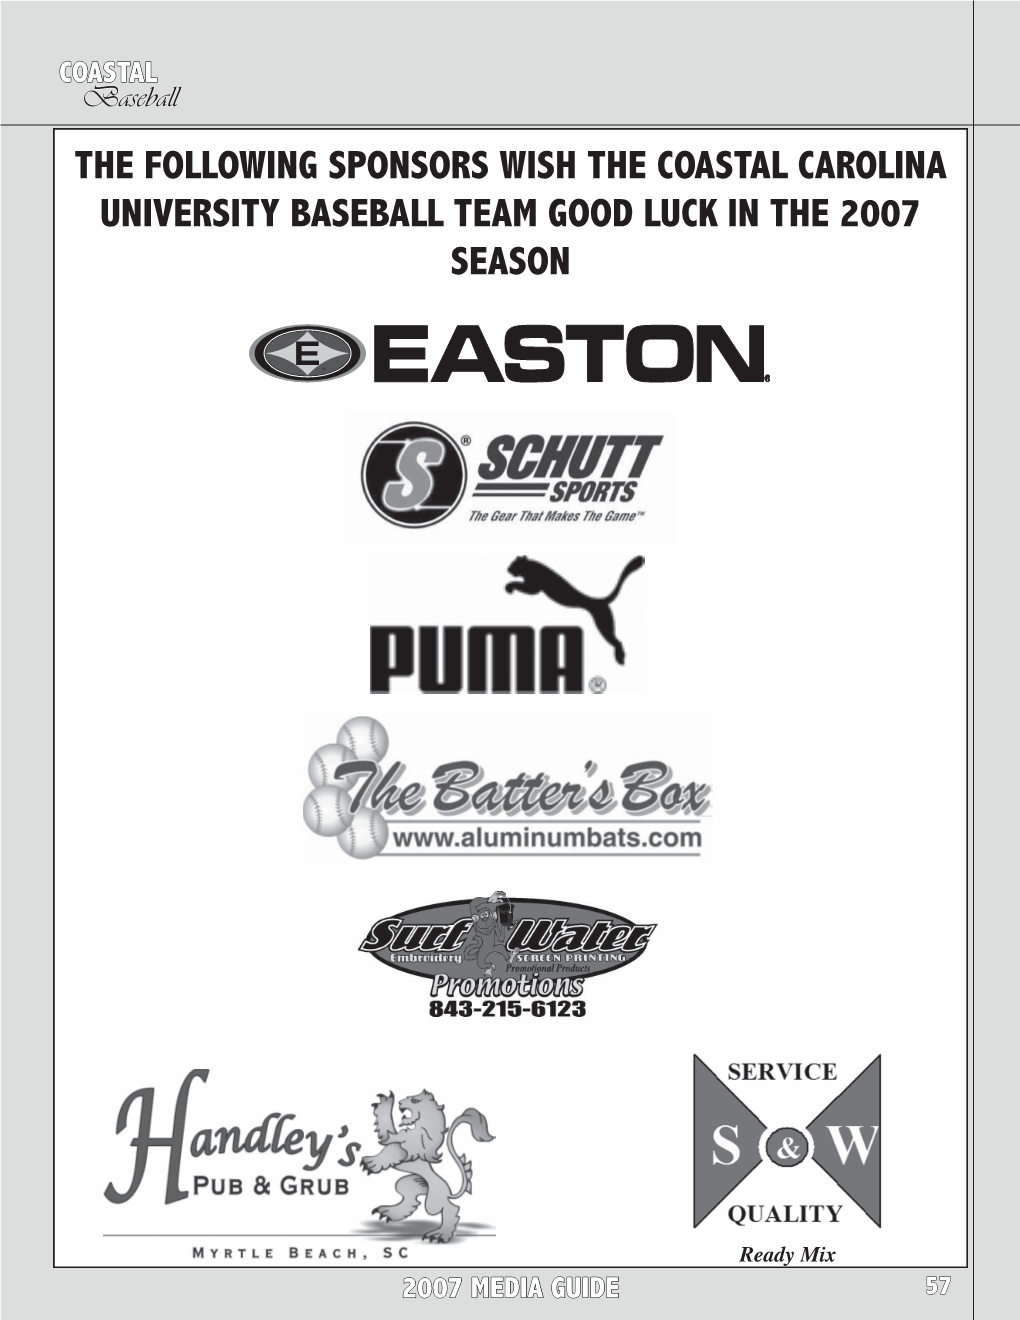 The Following Sponsors Wish the Coastal Carolina University Baseball Team Good Luck in the 2007 Season